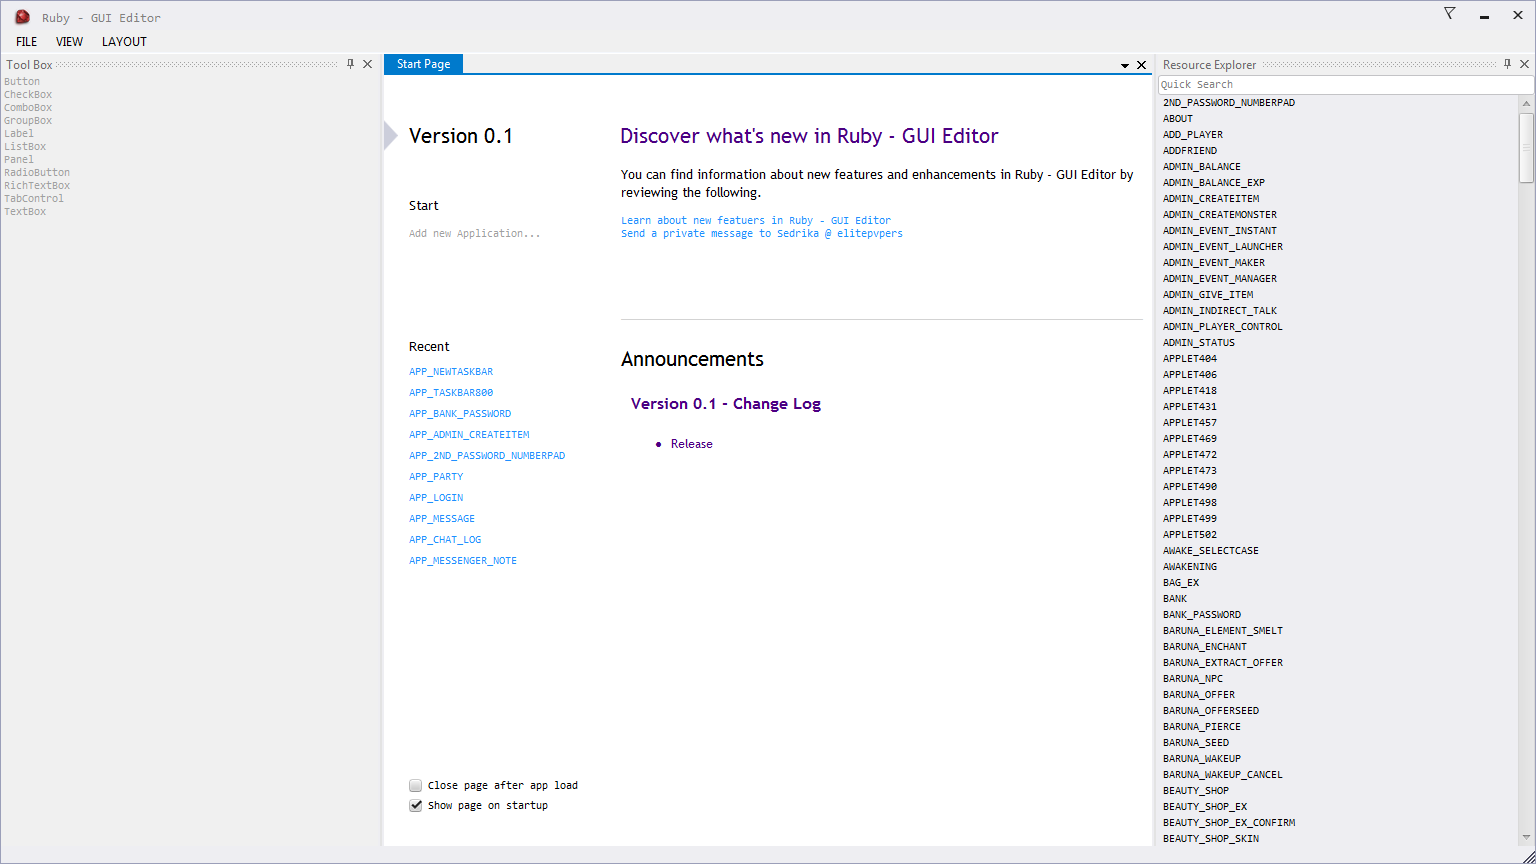 Sedrika - Ruby - GUI Editor 2014 - RaGEZONE Forums